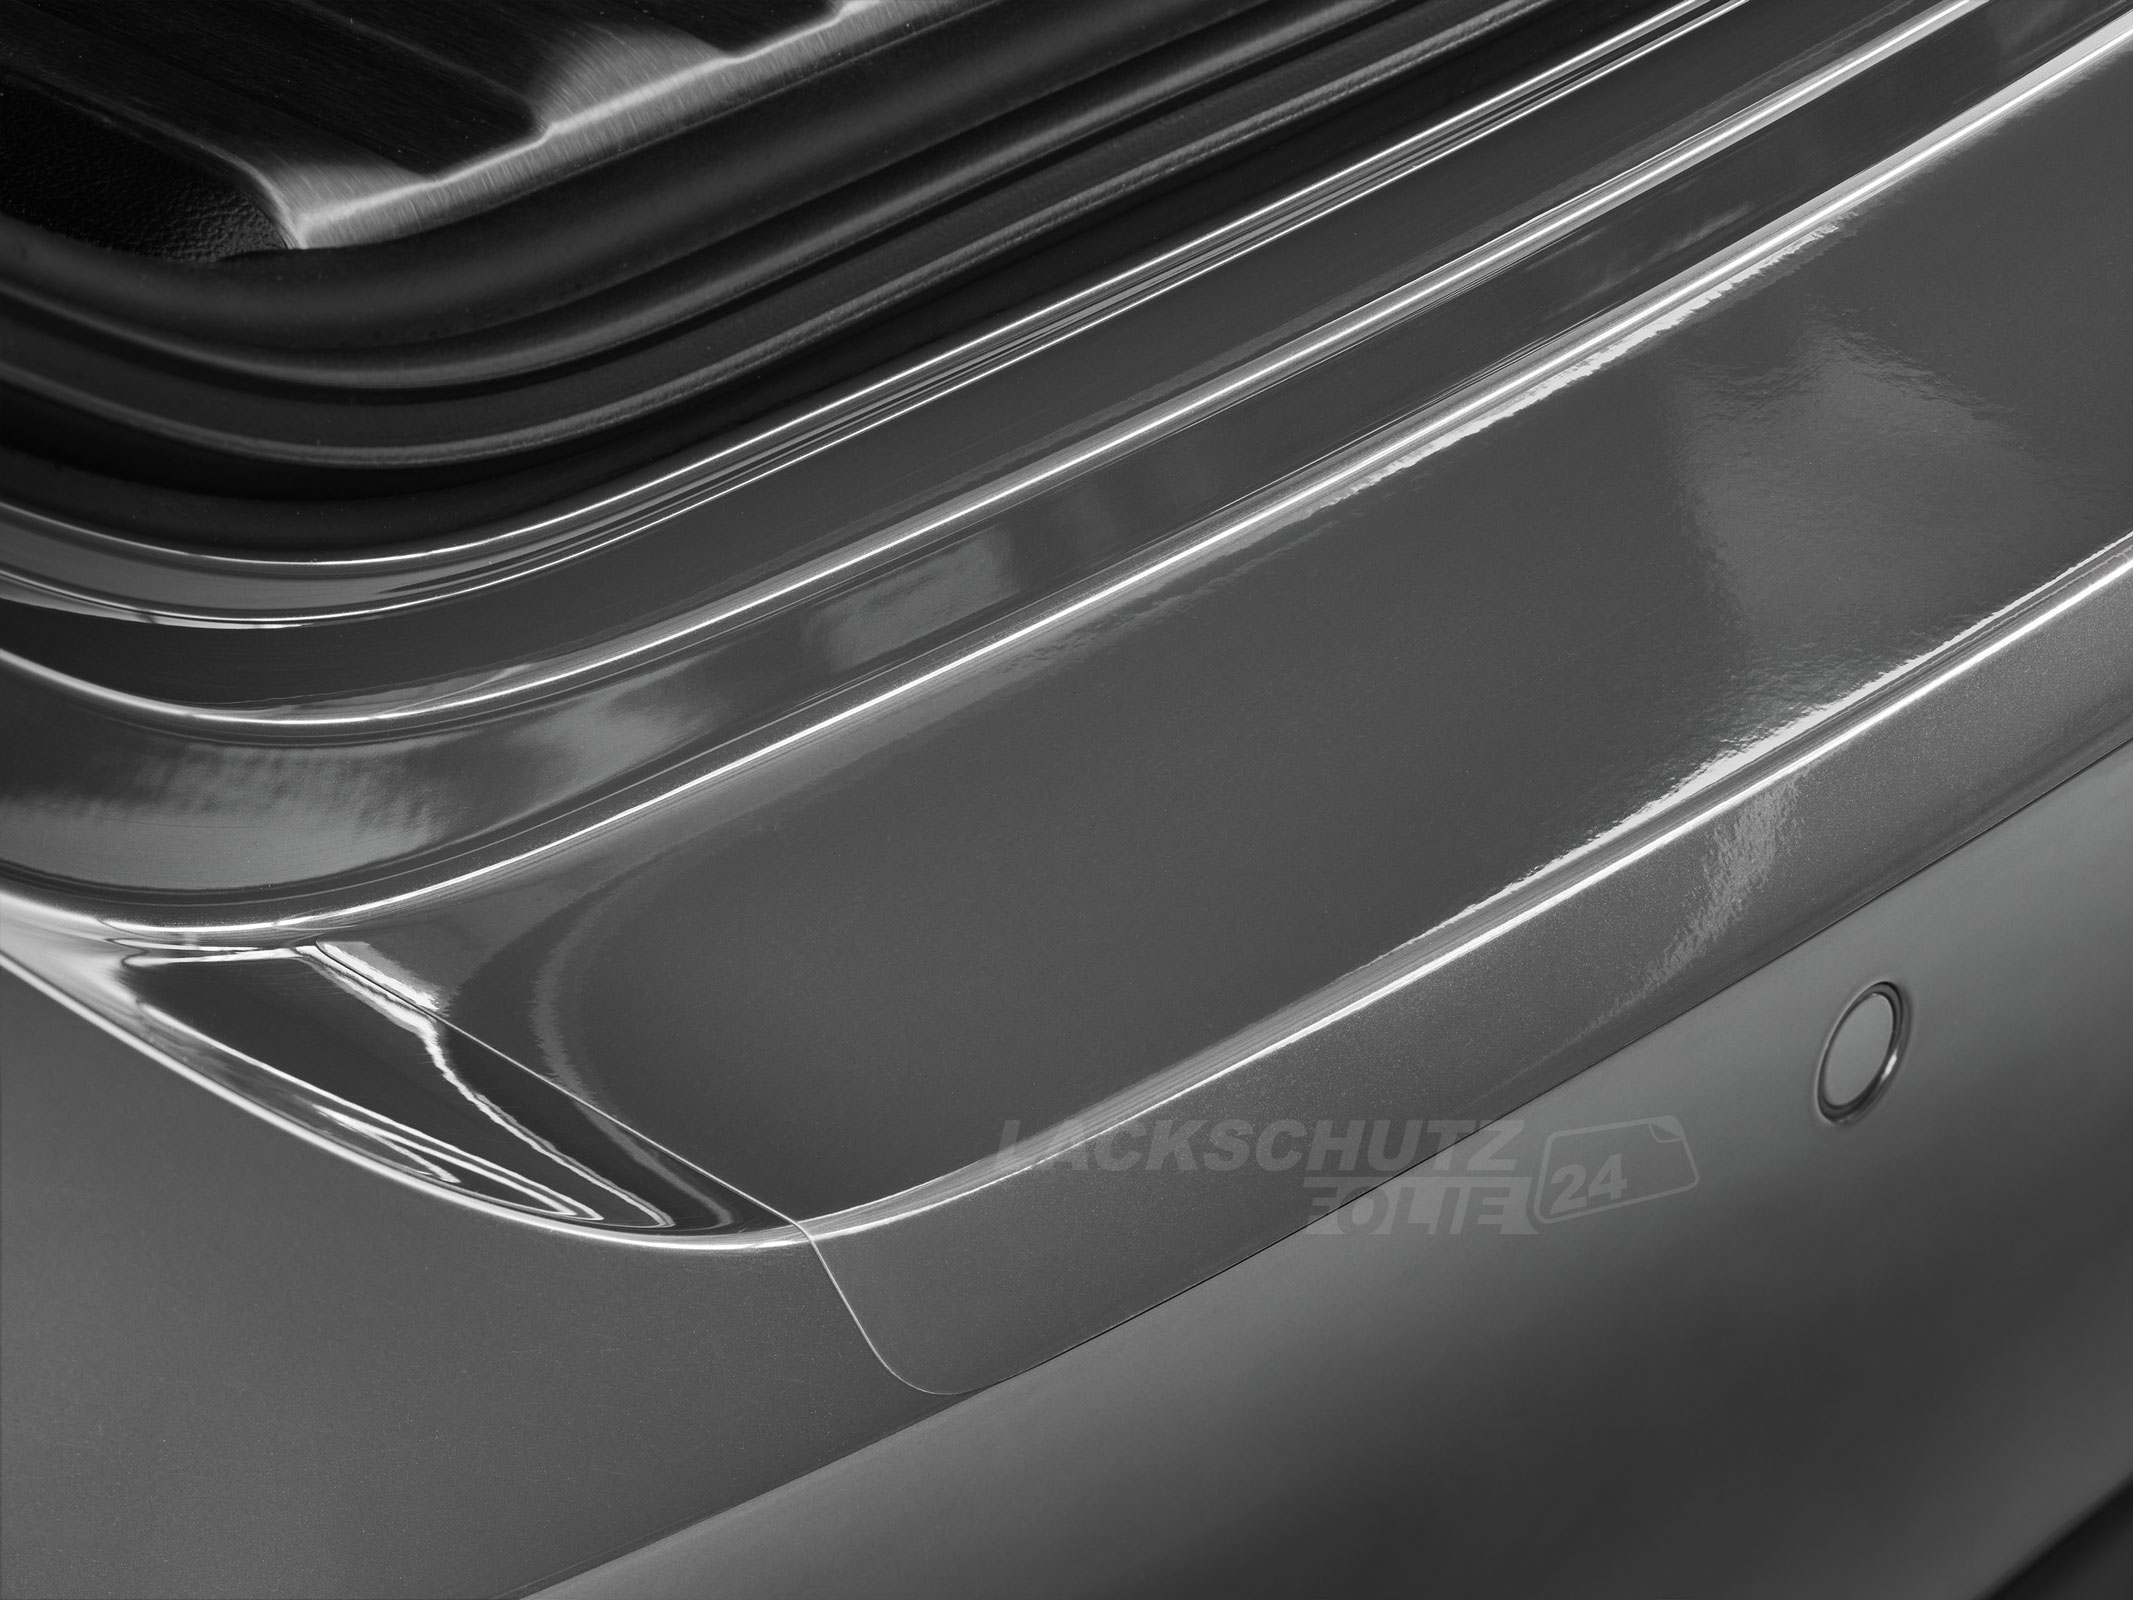 Ladekantenschutzfolie - Transparent Glatt Hochglänzend 240 µm stark für Ford Fiesta Facelift, BJ 2005-2008